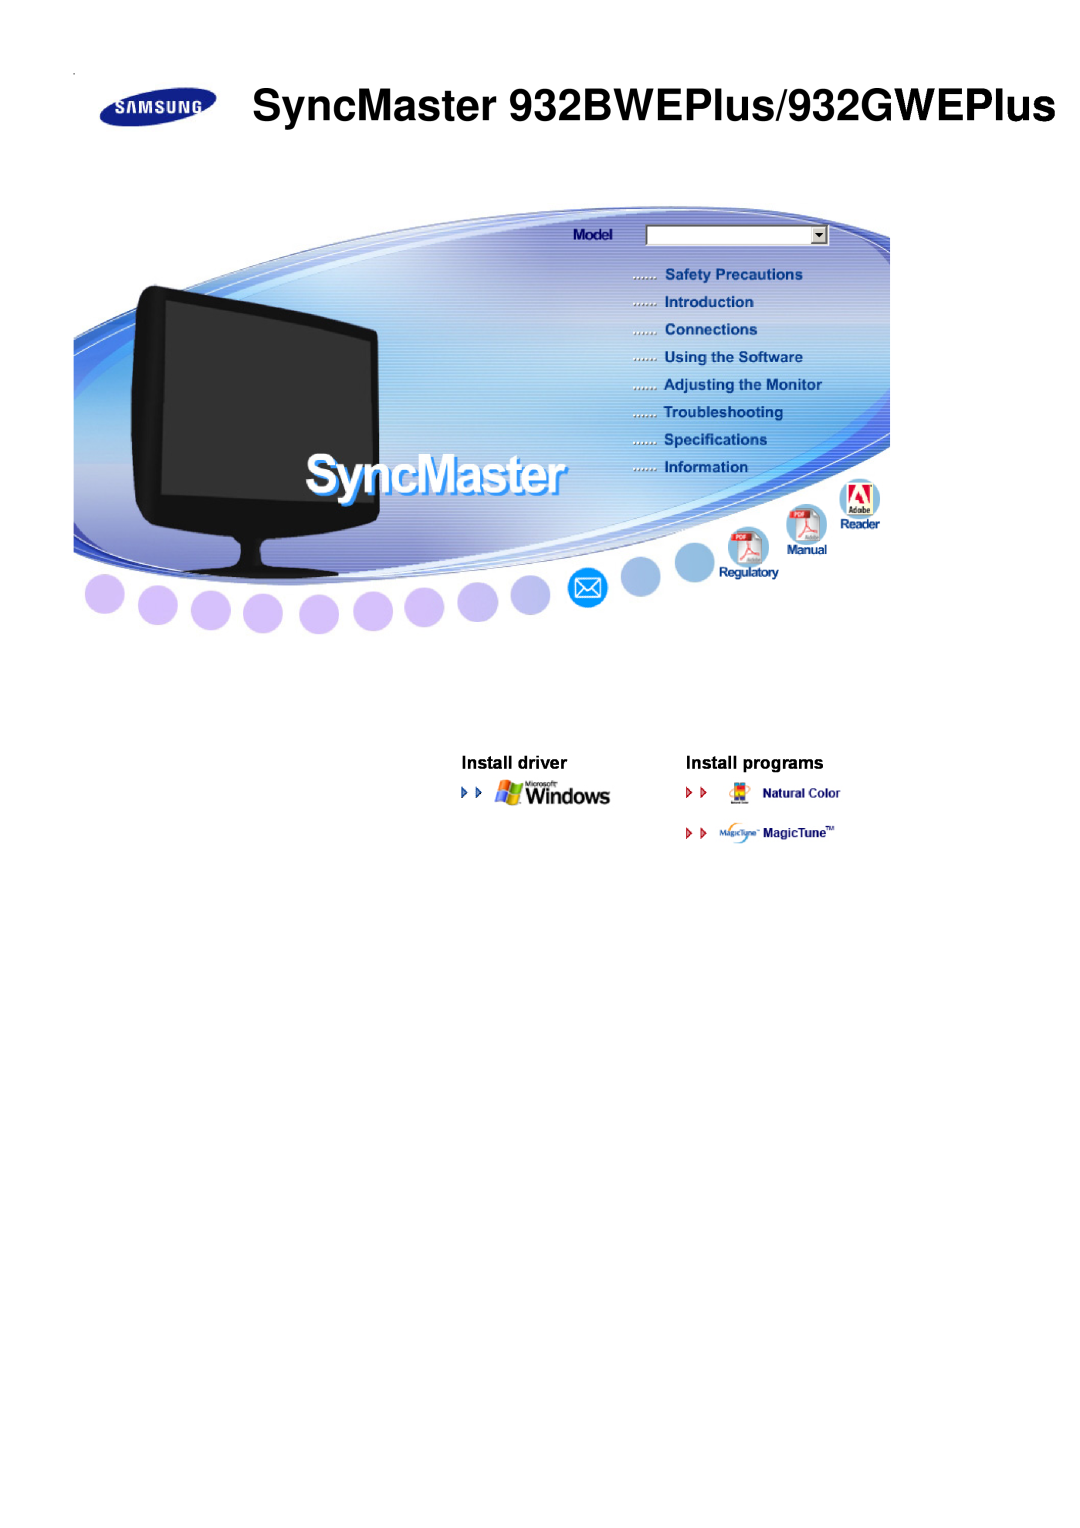 Samsung manual Install driver, Install programs, SyncMaster 932BWEPlus/932GWEPlus 